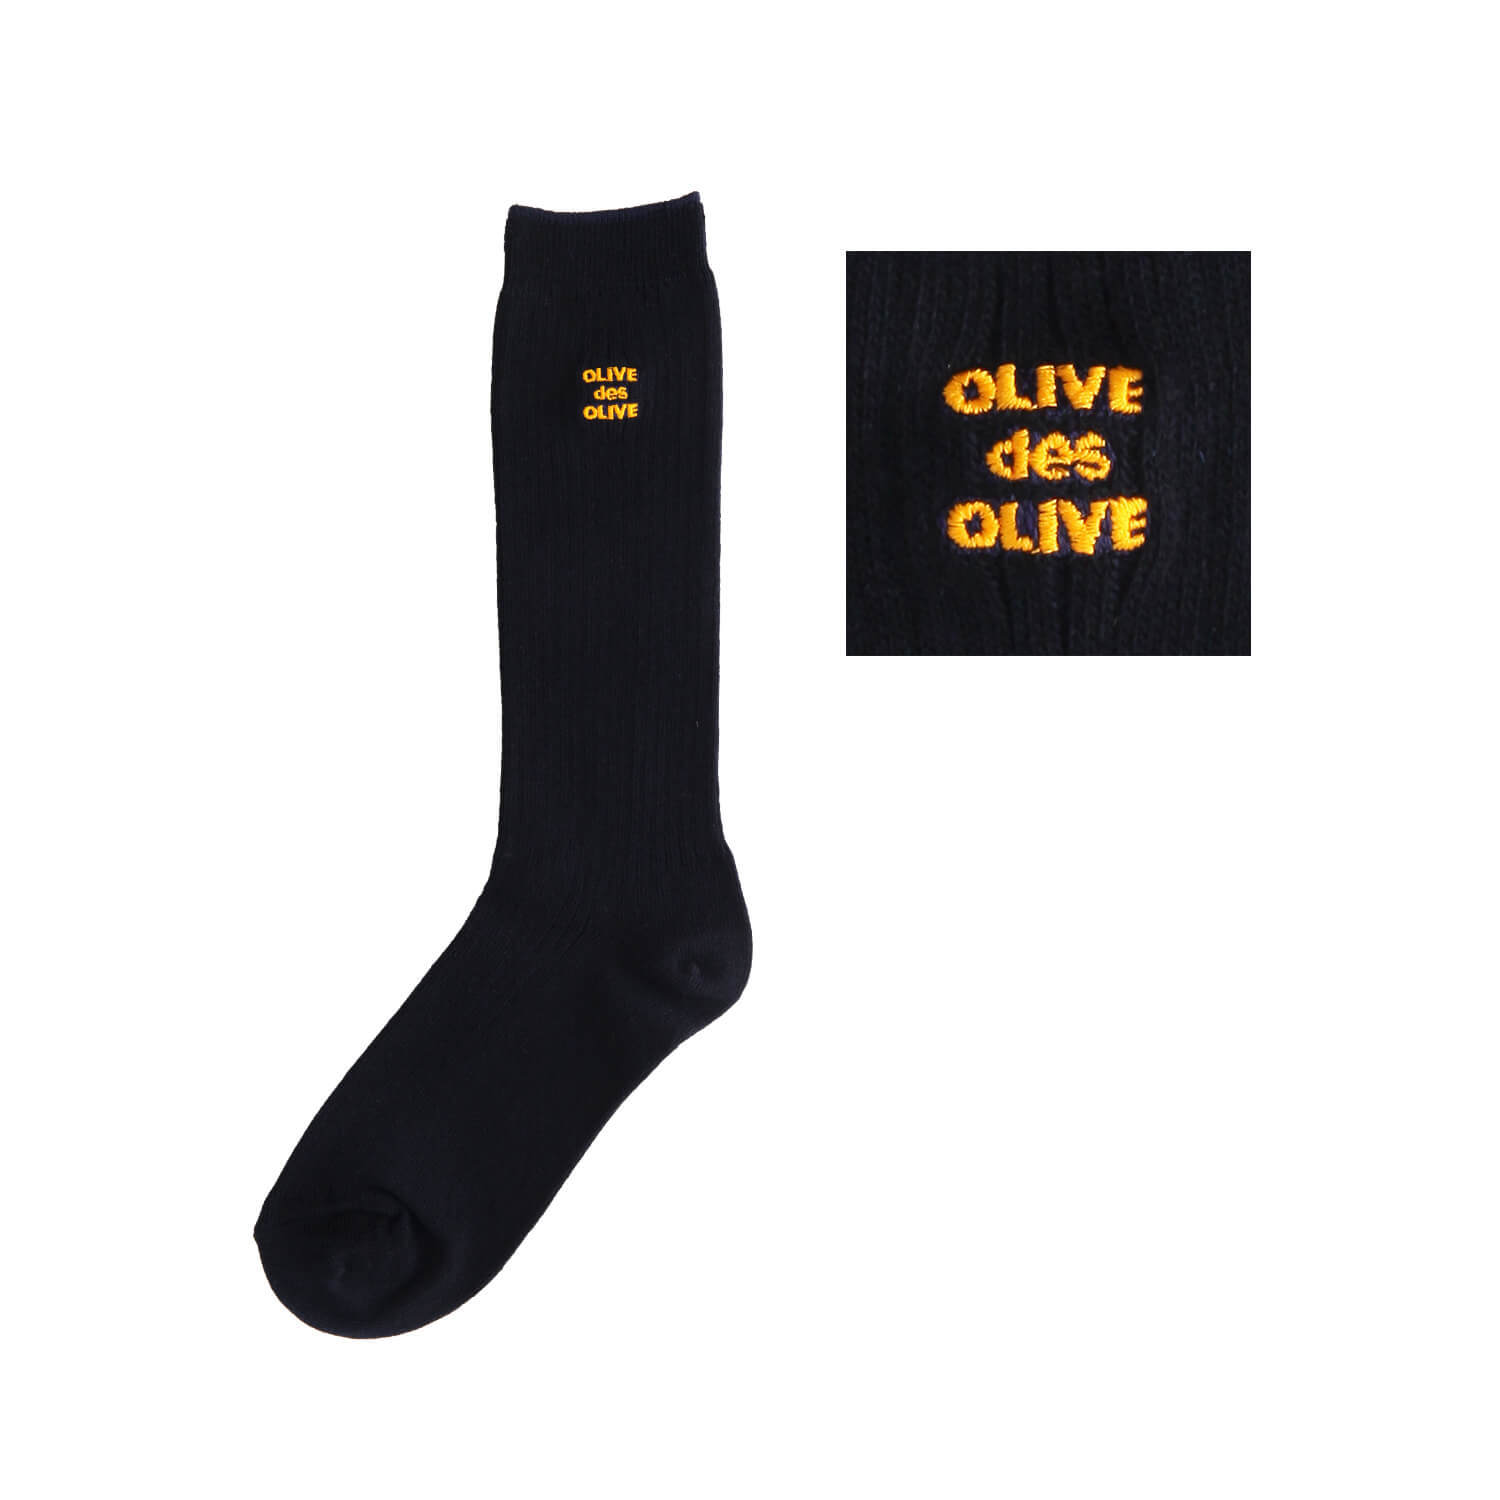 OLIVE des OLIVEのポップなロゴ刺繍入りのレギュラーソックス。刺繍カラー-59オレンジ